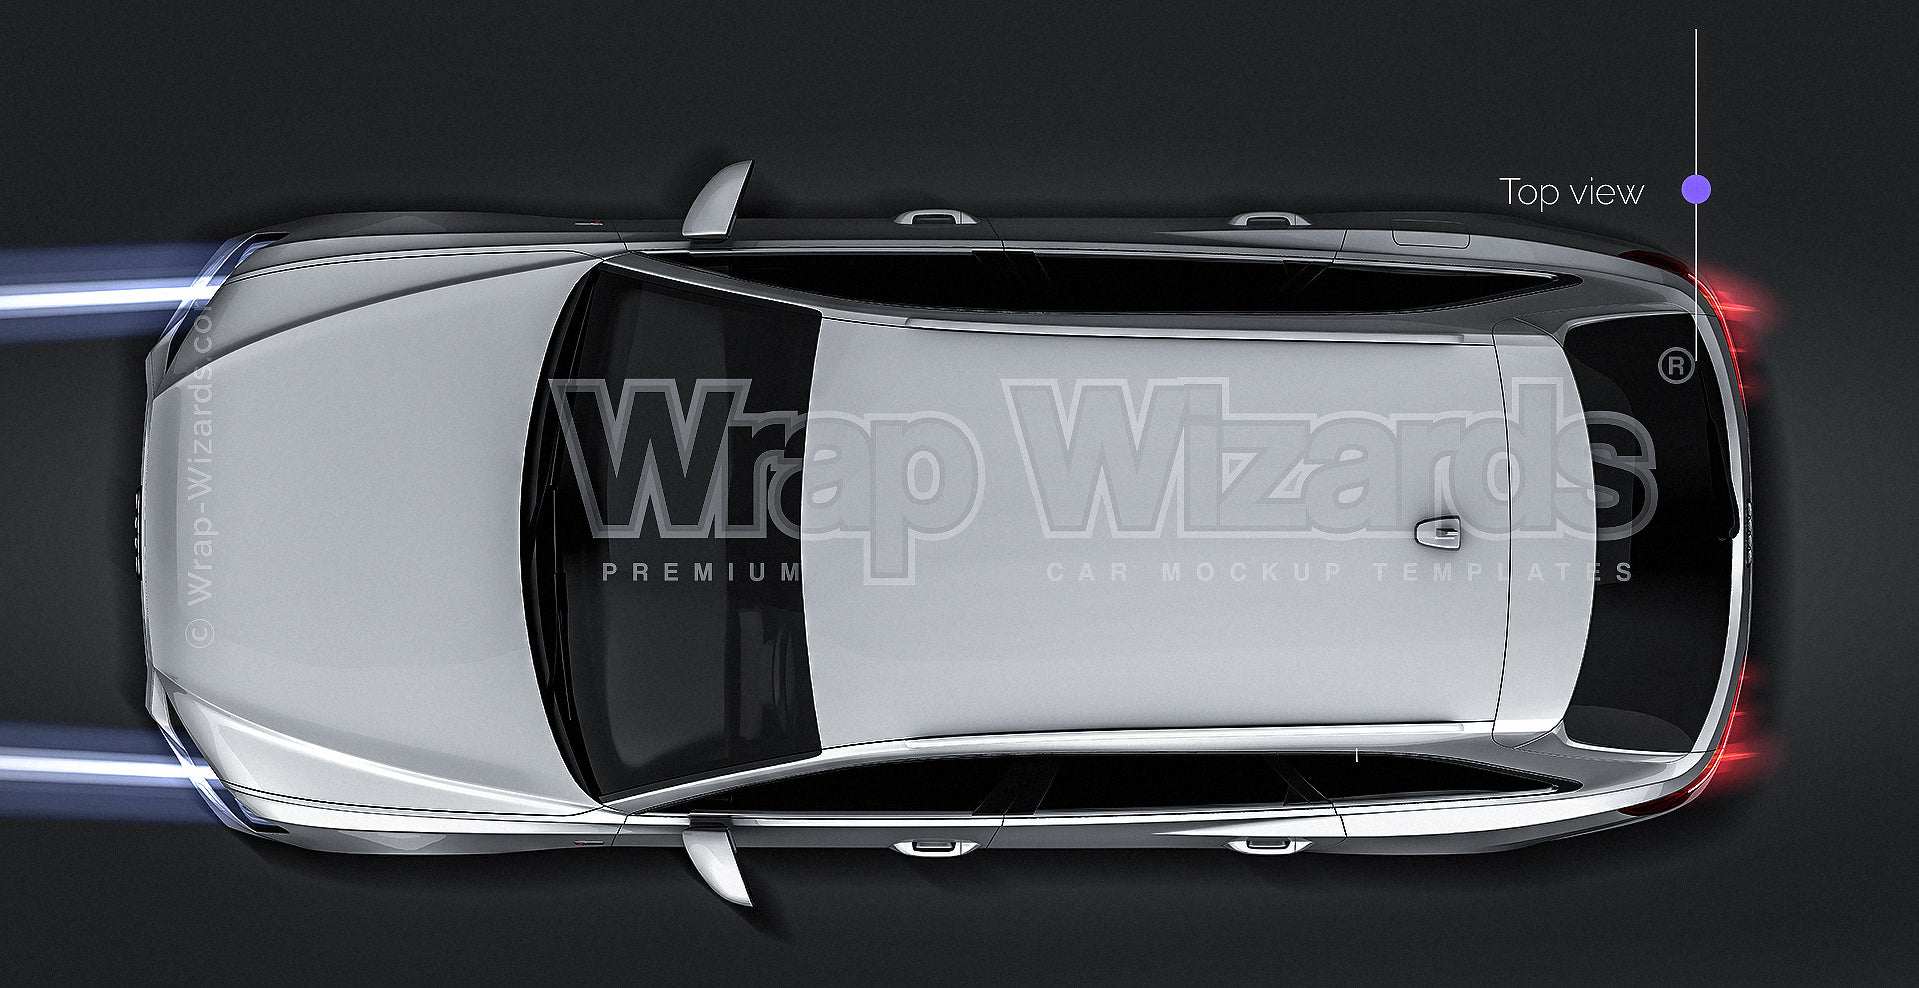 Download Audi A6 Avant S-line 2019 all sides Car Mockup Template.psd - Wrap-Wizards.com - Premium Car ...